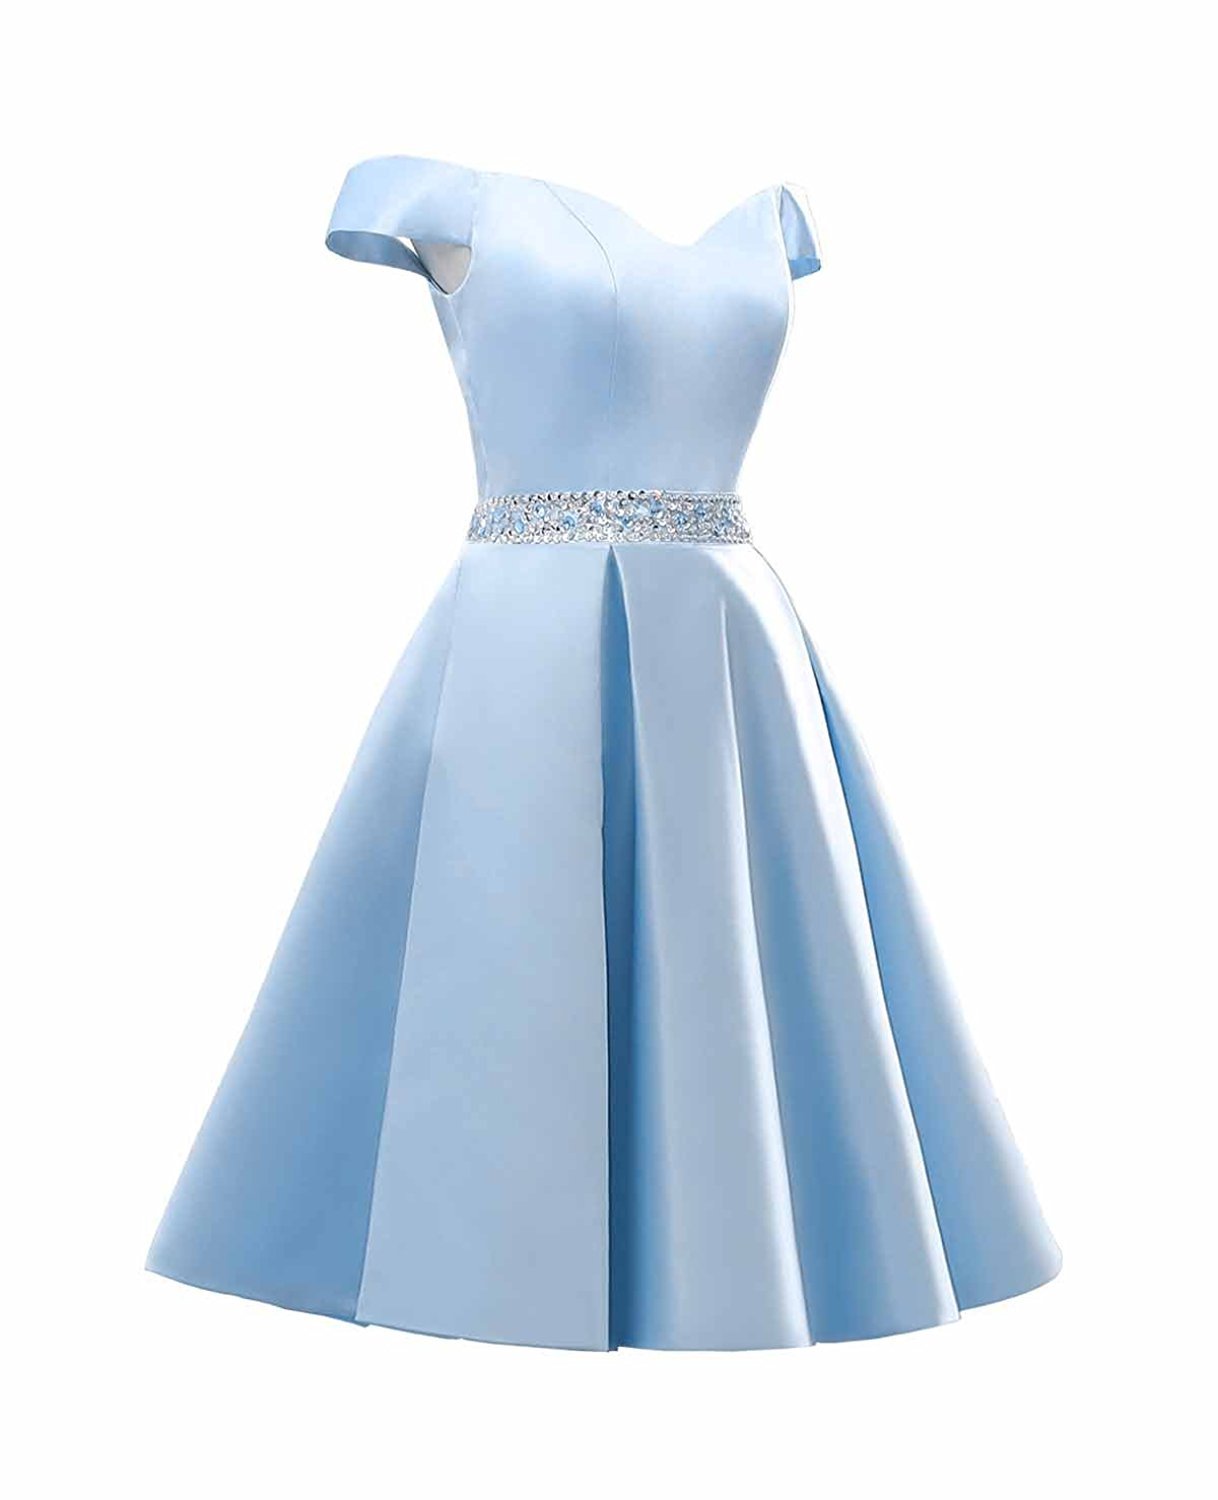 Cheapp Sky Blue Satin Beaded Short Homecoming Dress Above Length Mini ...